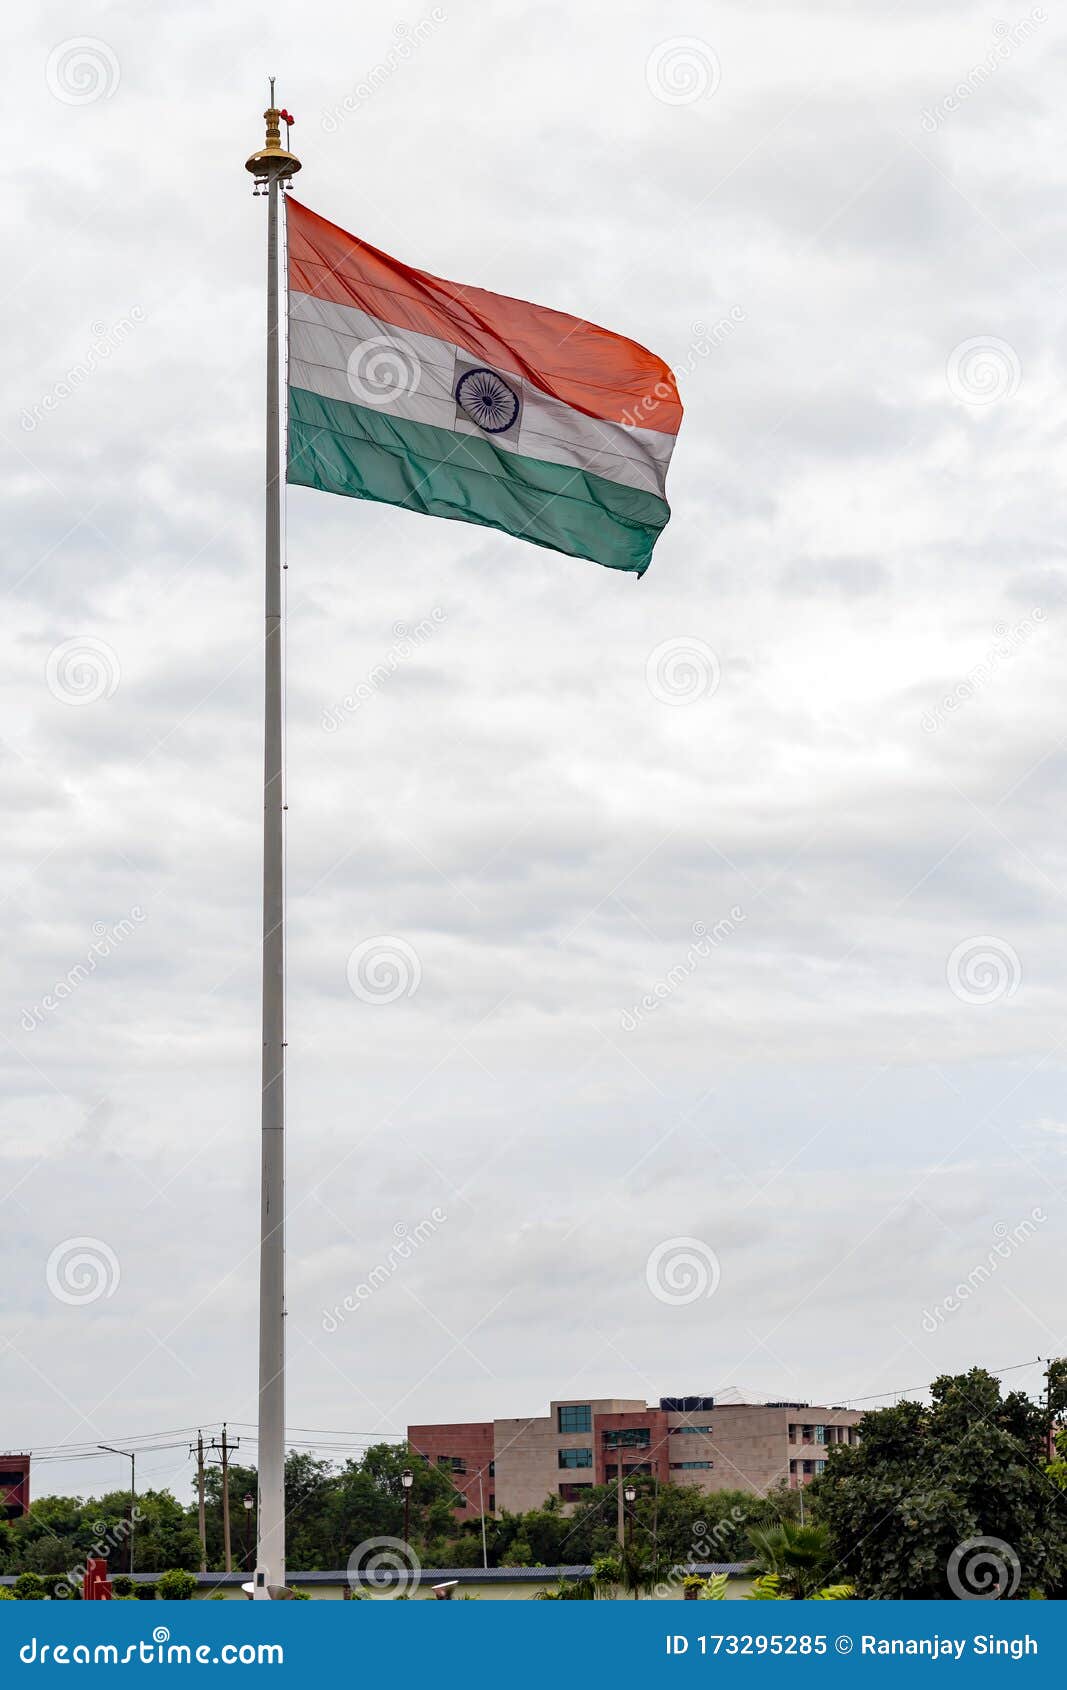 independence day images flag hoisting